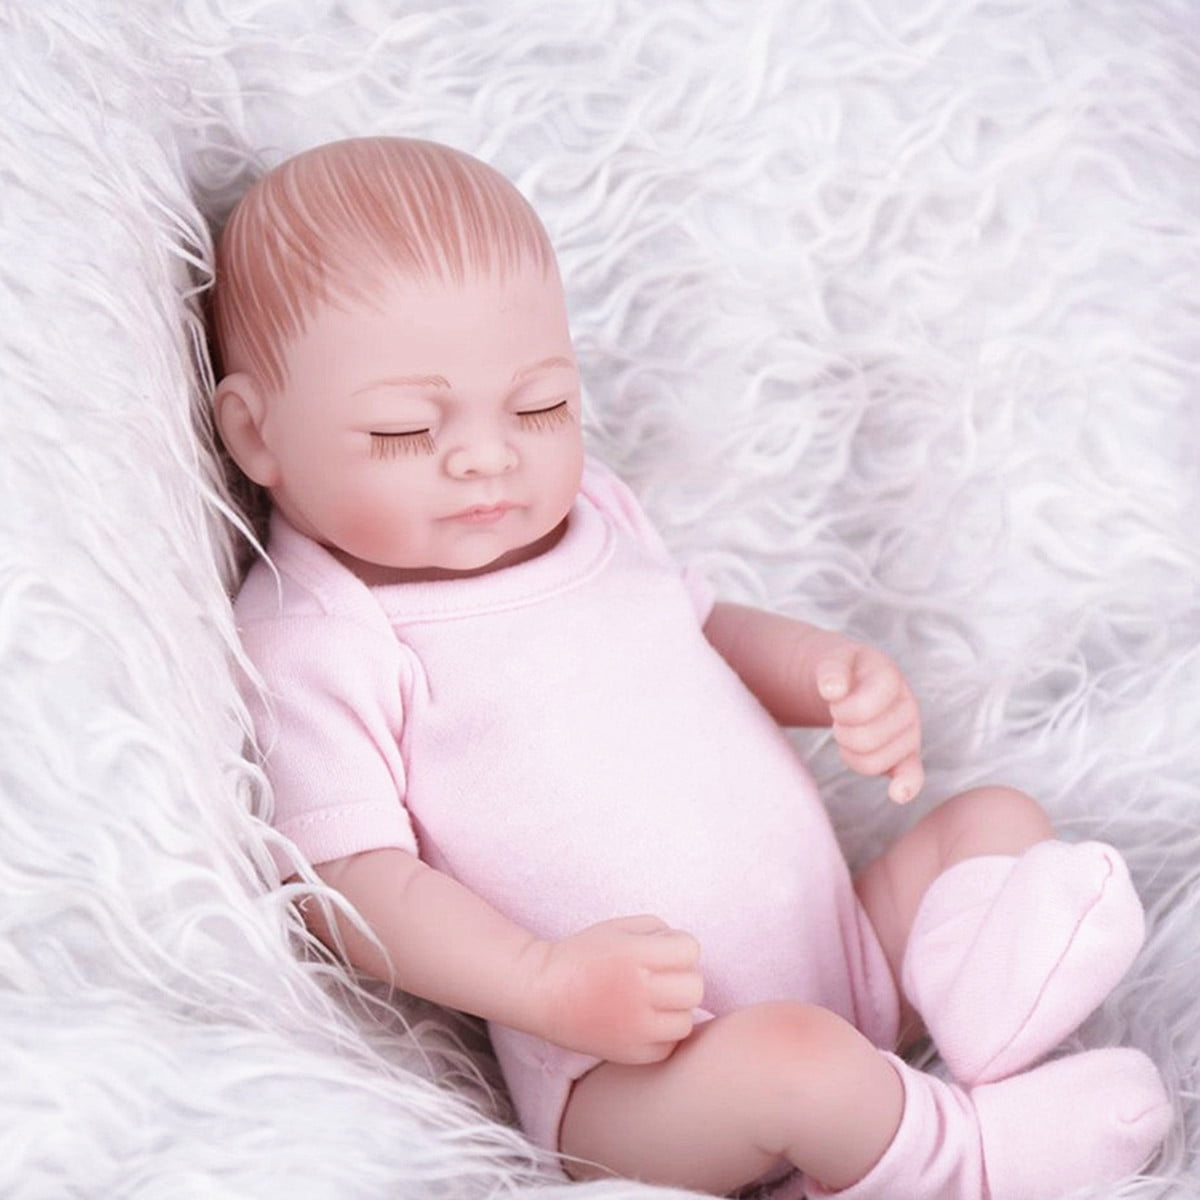 reborn dolls for sale at walmart